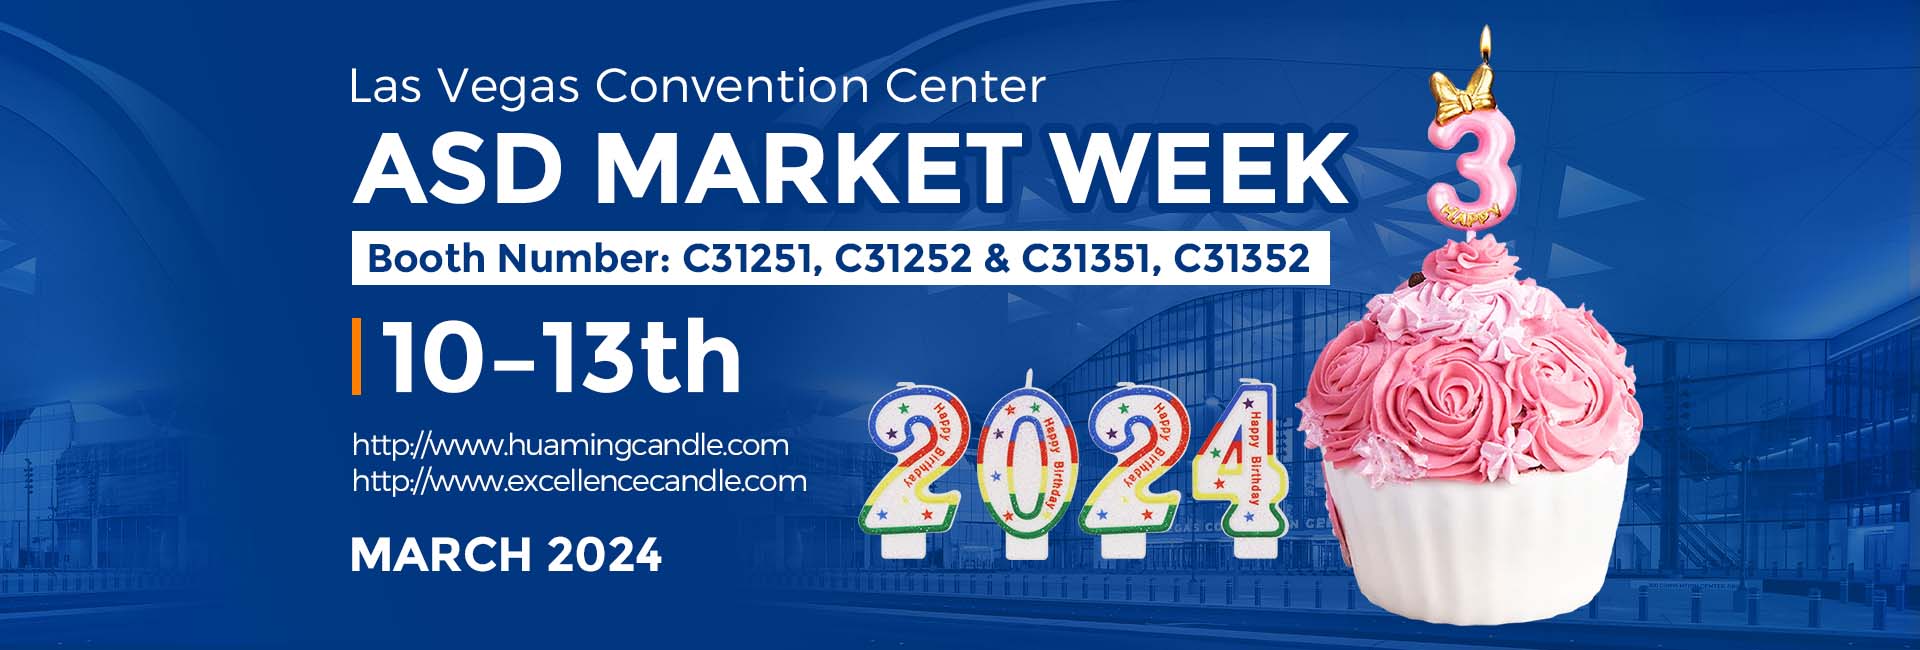 ASD Market Week  Las Vegas Convention Center